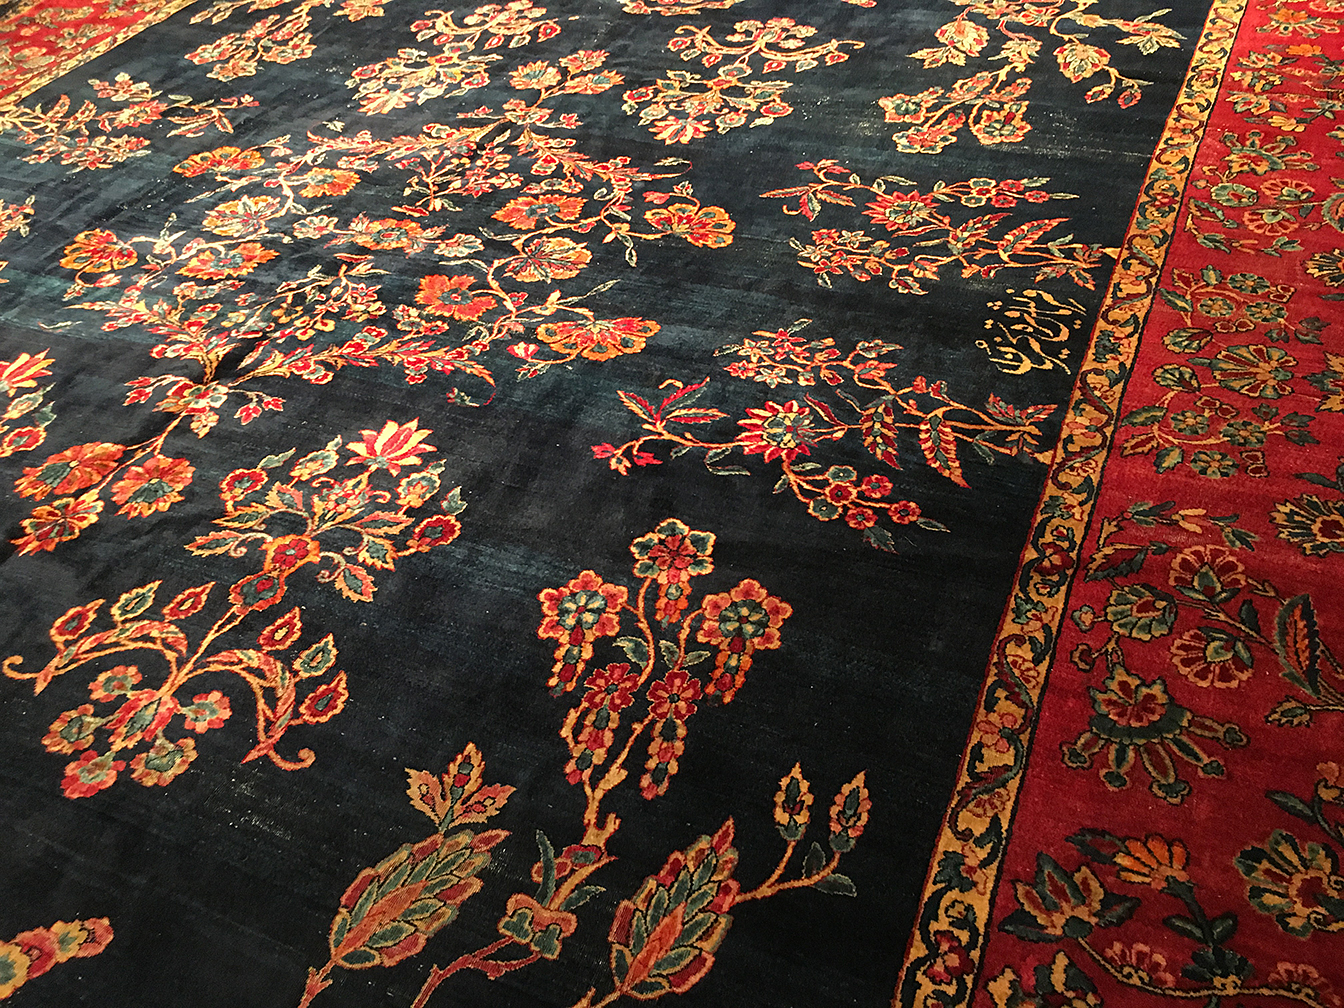 Antique kirman, lavar Carpet - # 53565